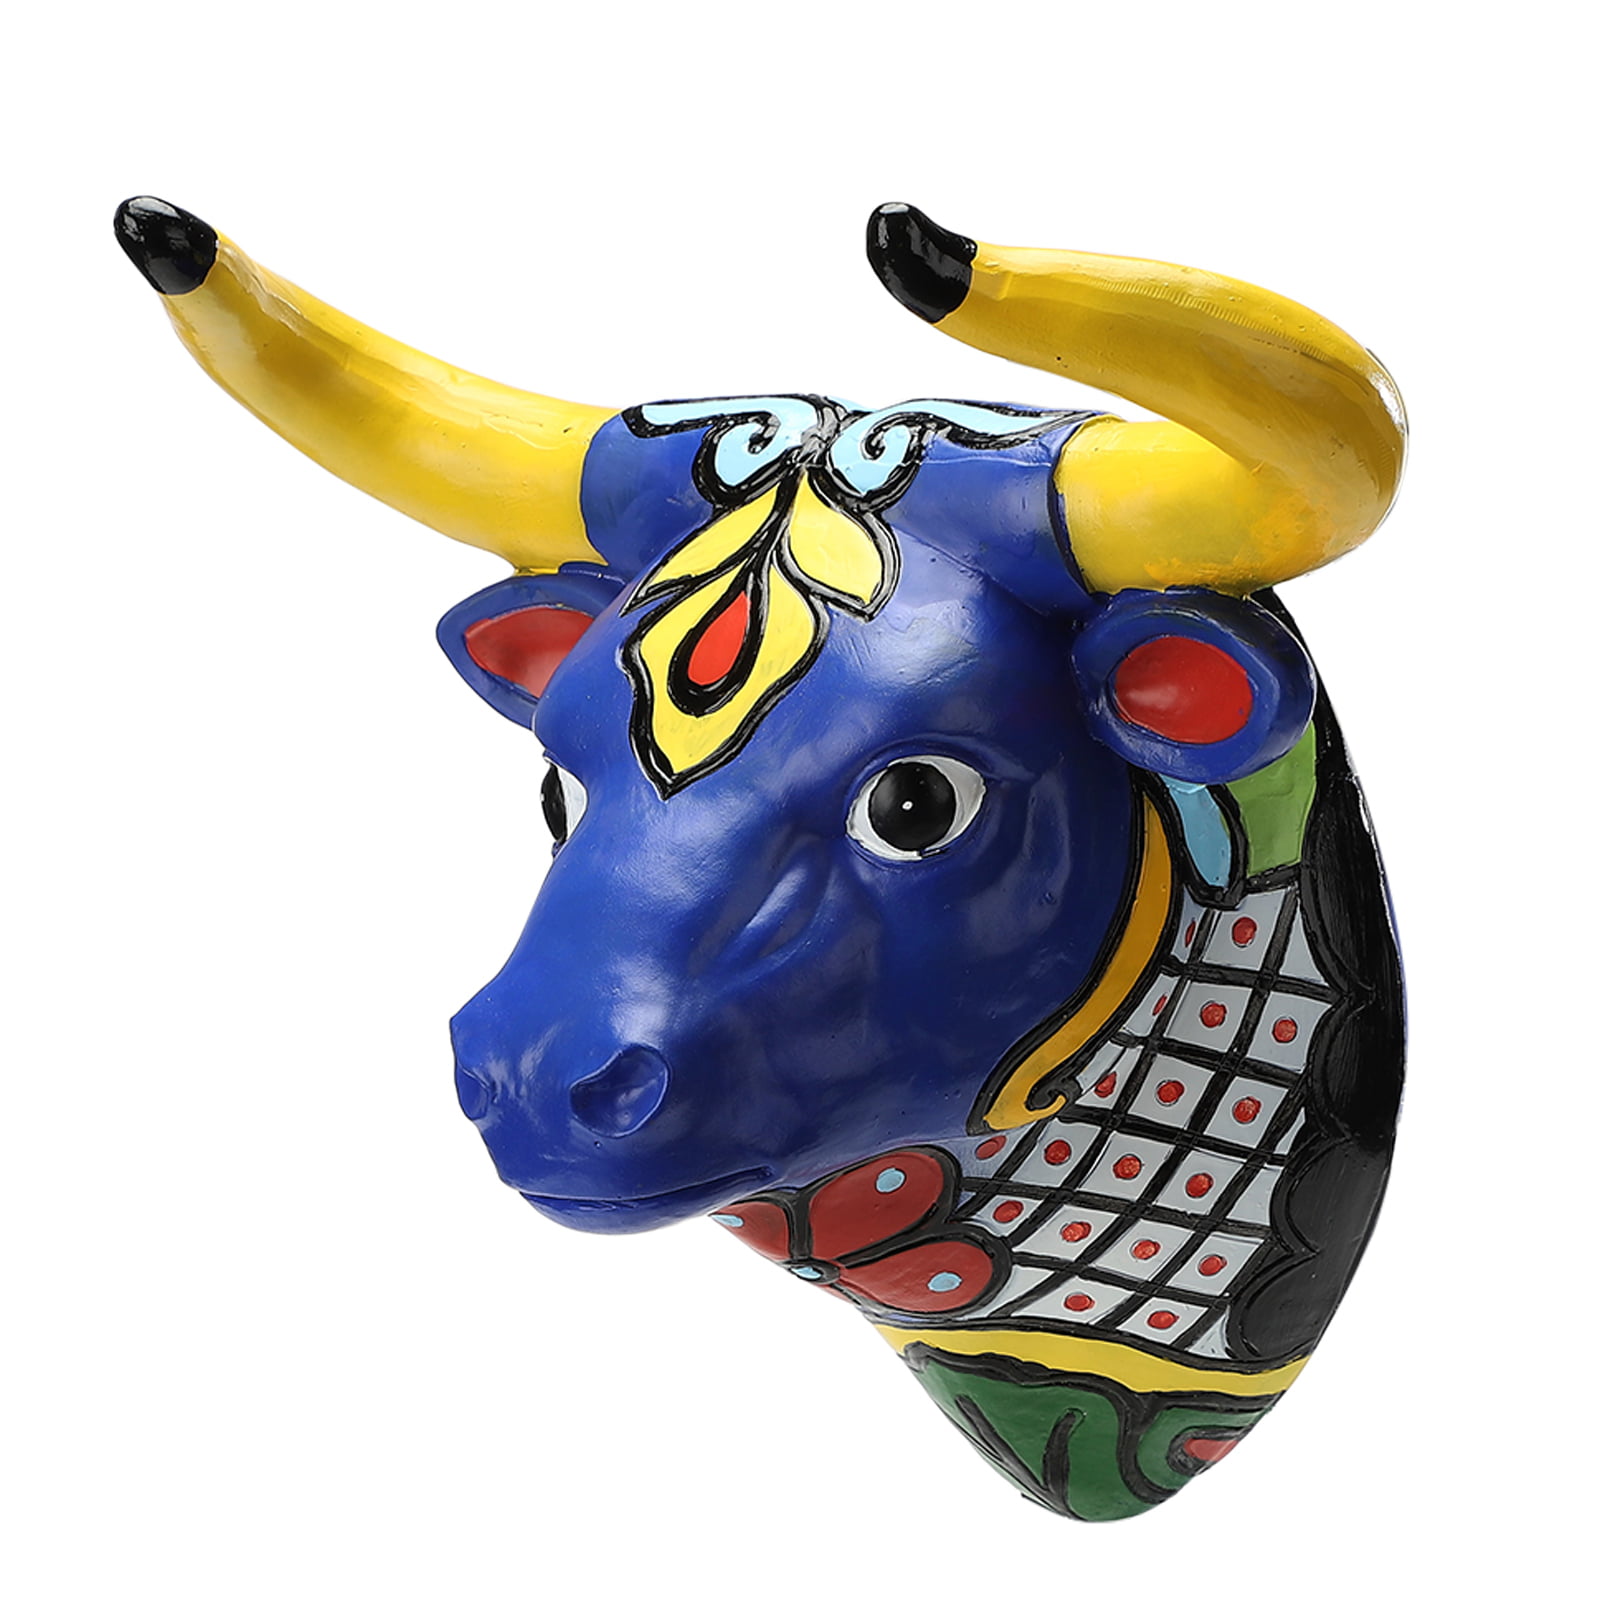 Cow Head Bull Vinatge Statue Wooden Wall Sculpture Figurine Art Home decor Rare 